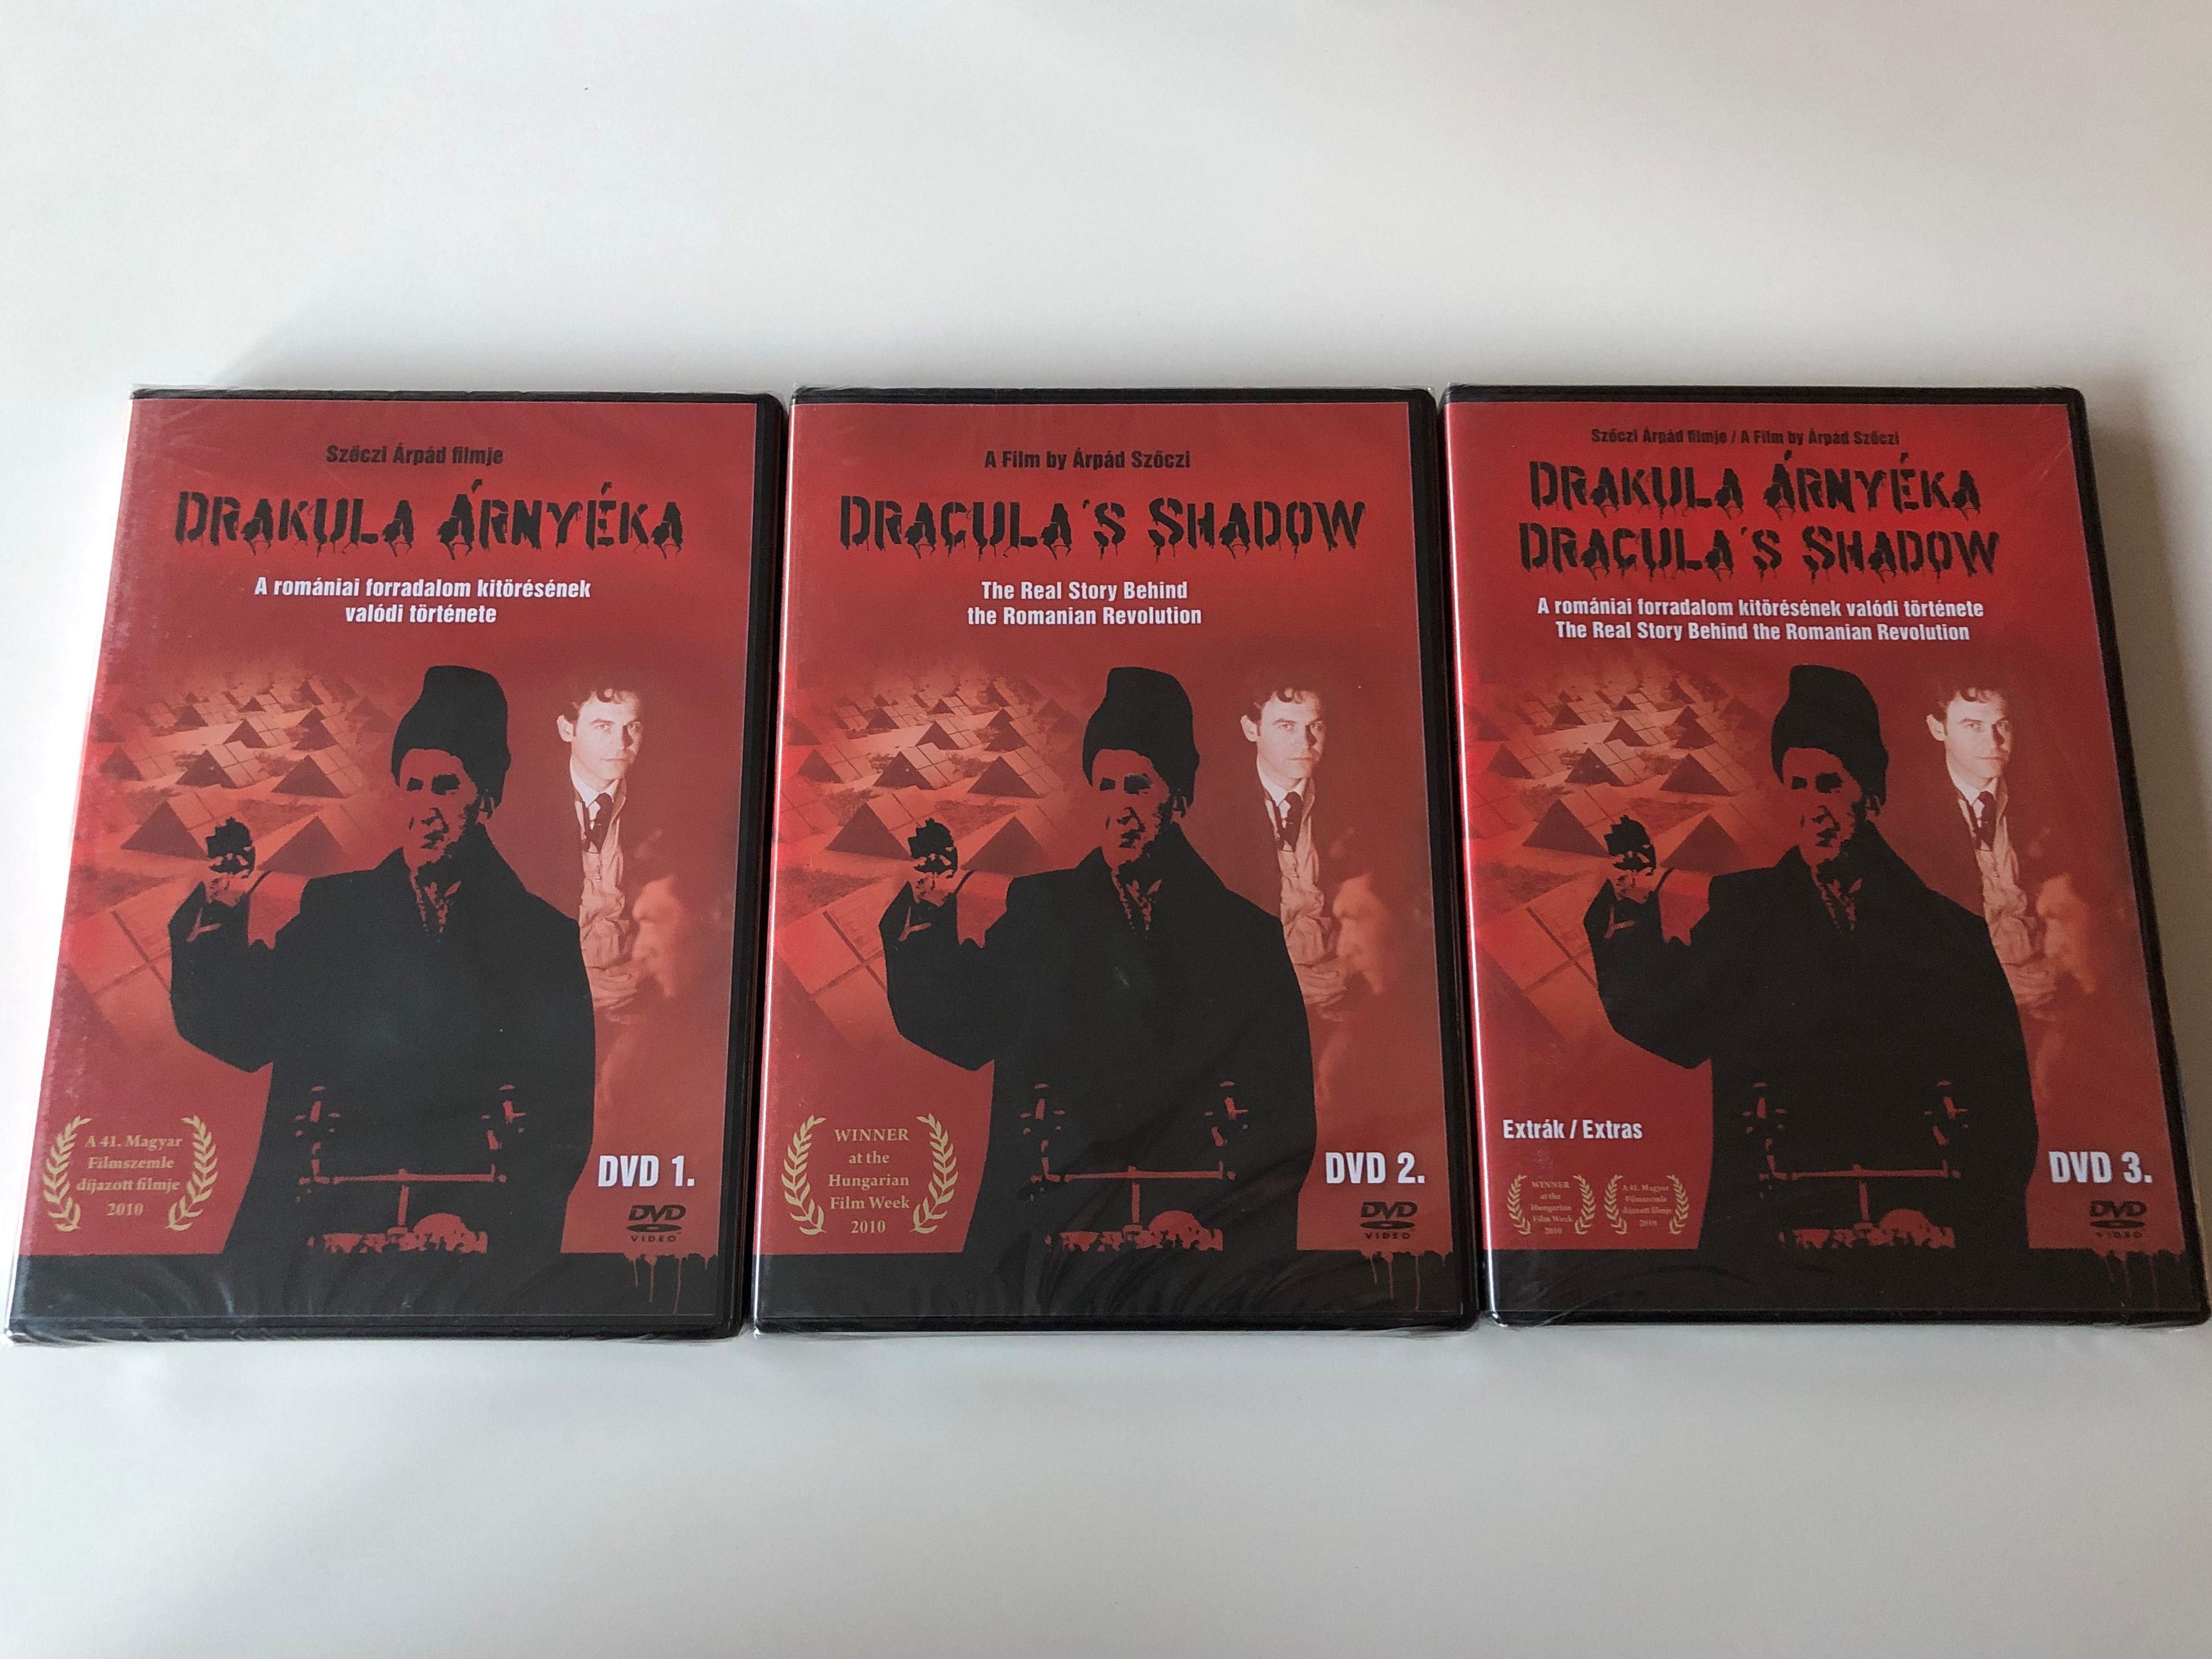 drakula-rny-ka-dvd-set-2009-the-shadow-of-dracula-3-dvd-1.jpg